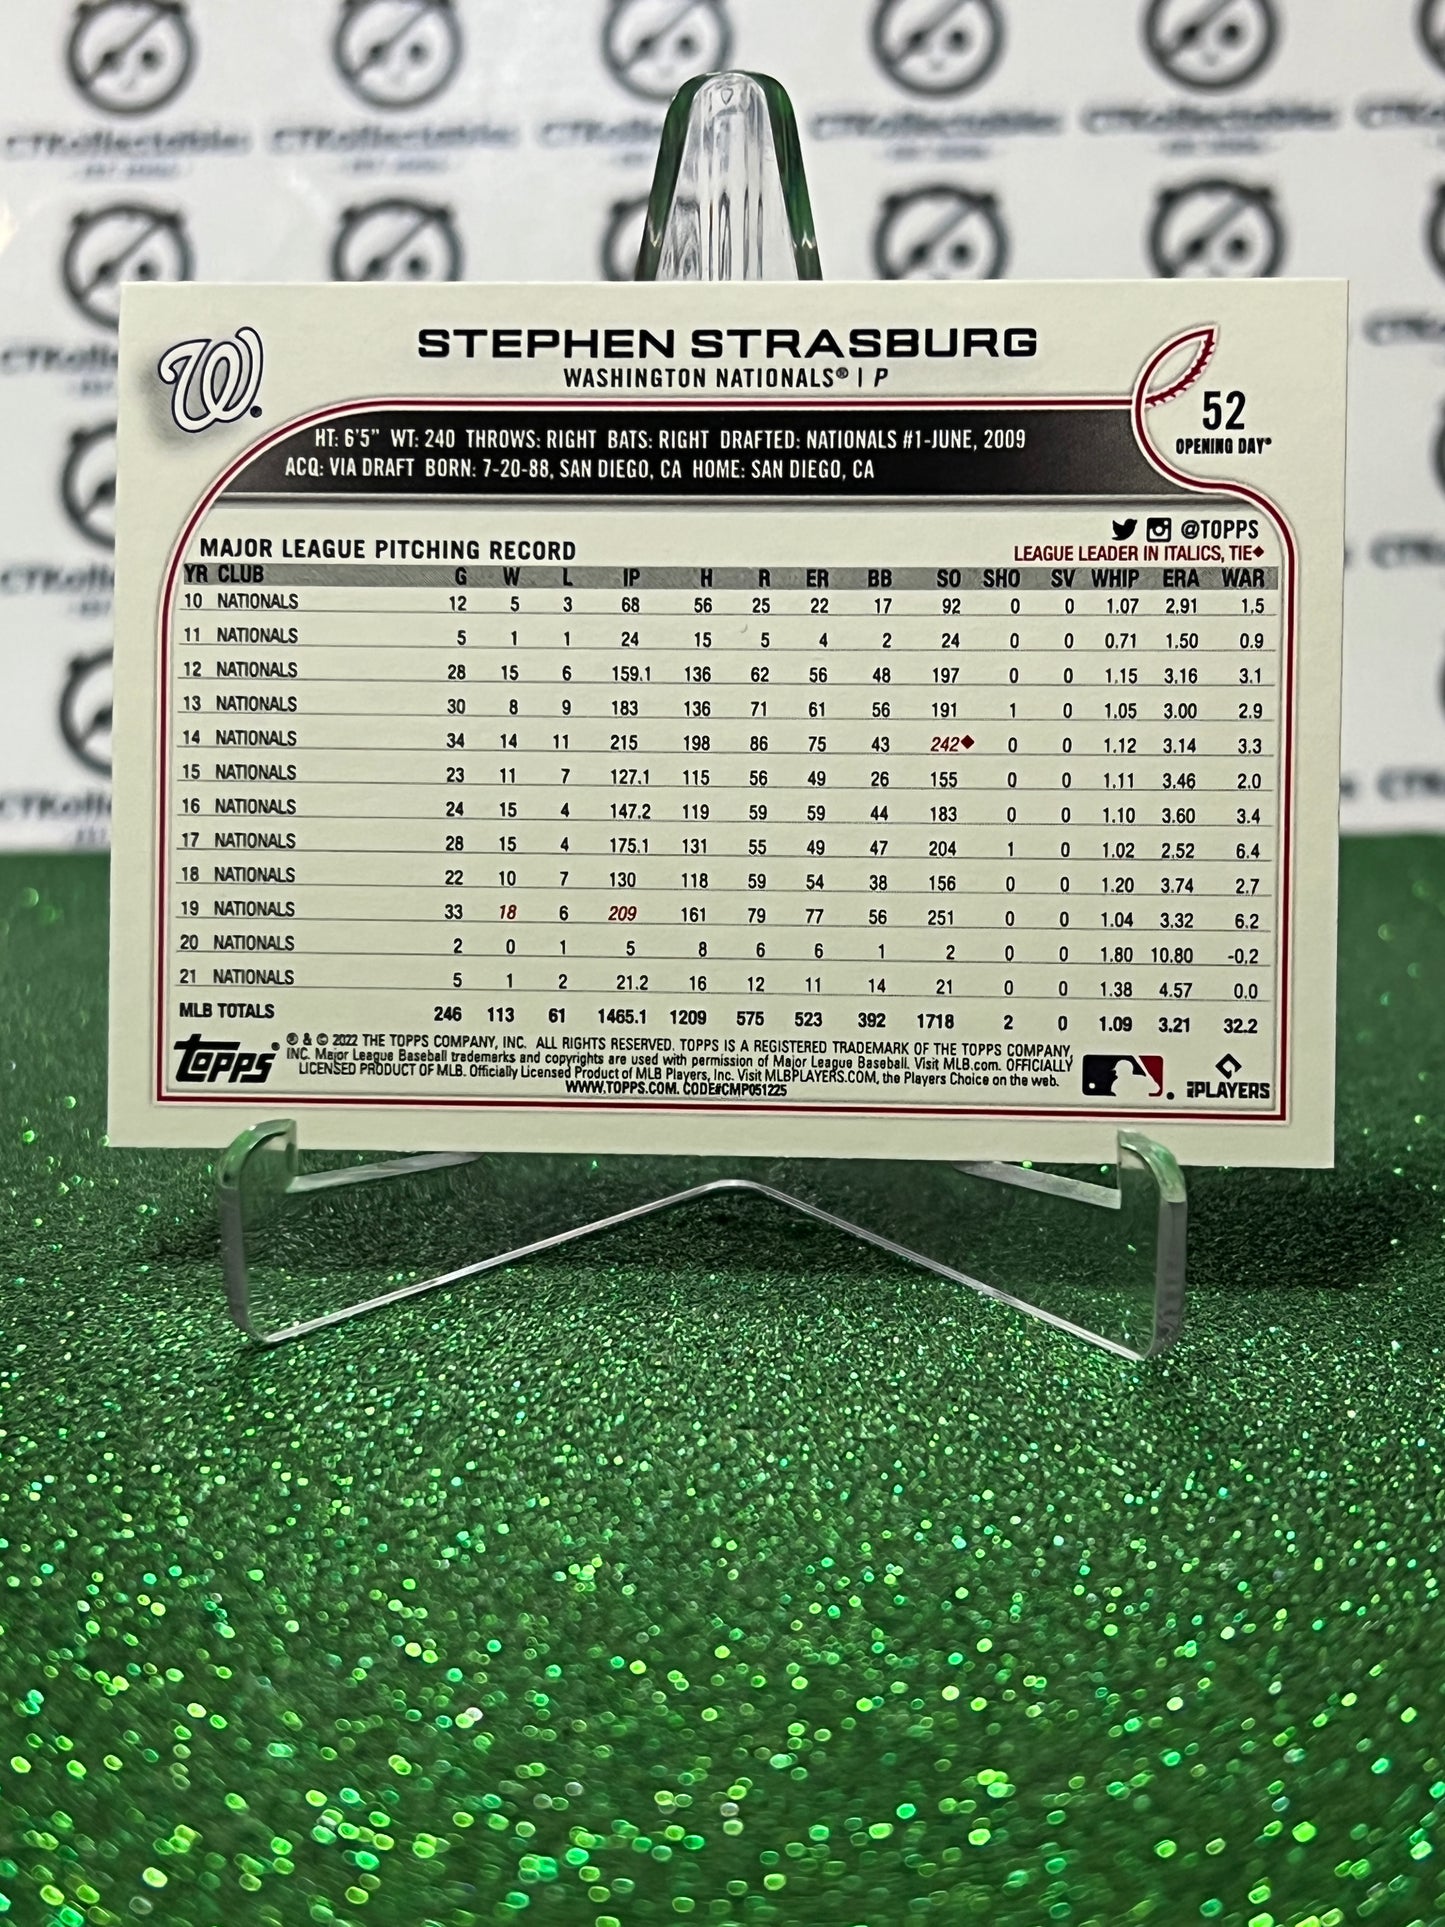 2022 TOPPS OPENING DAY STEPHEN STRASBURG # 52 WASHINGTON NATIONALS BASEBALL CARD